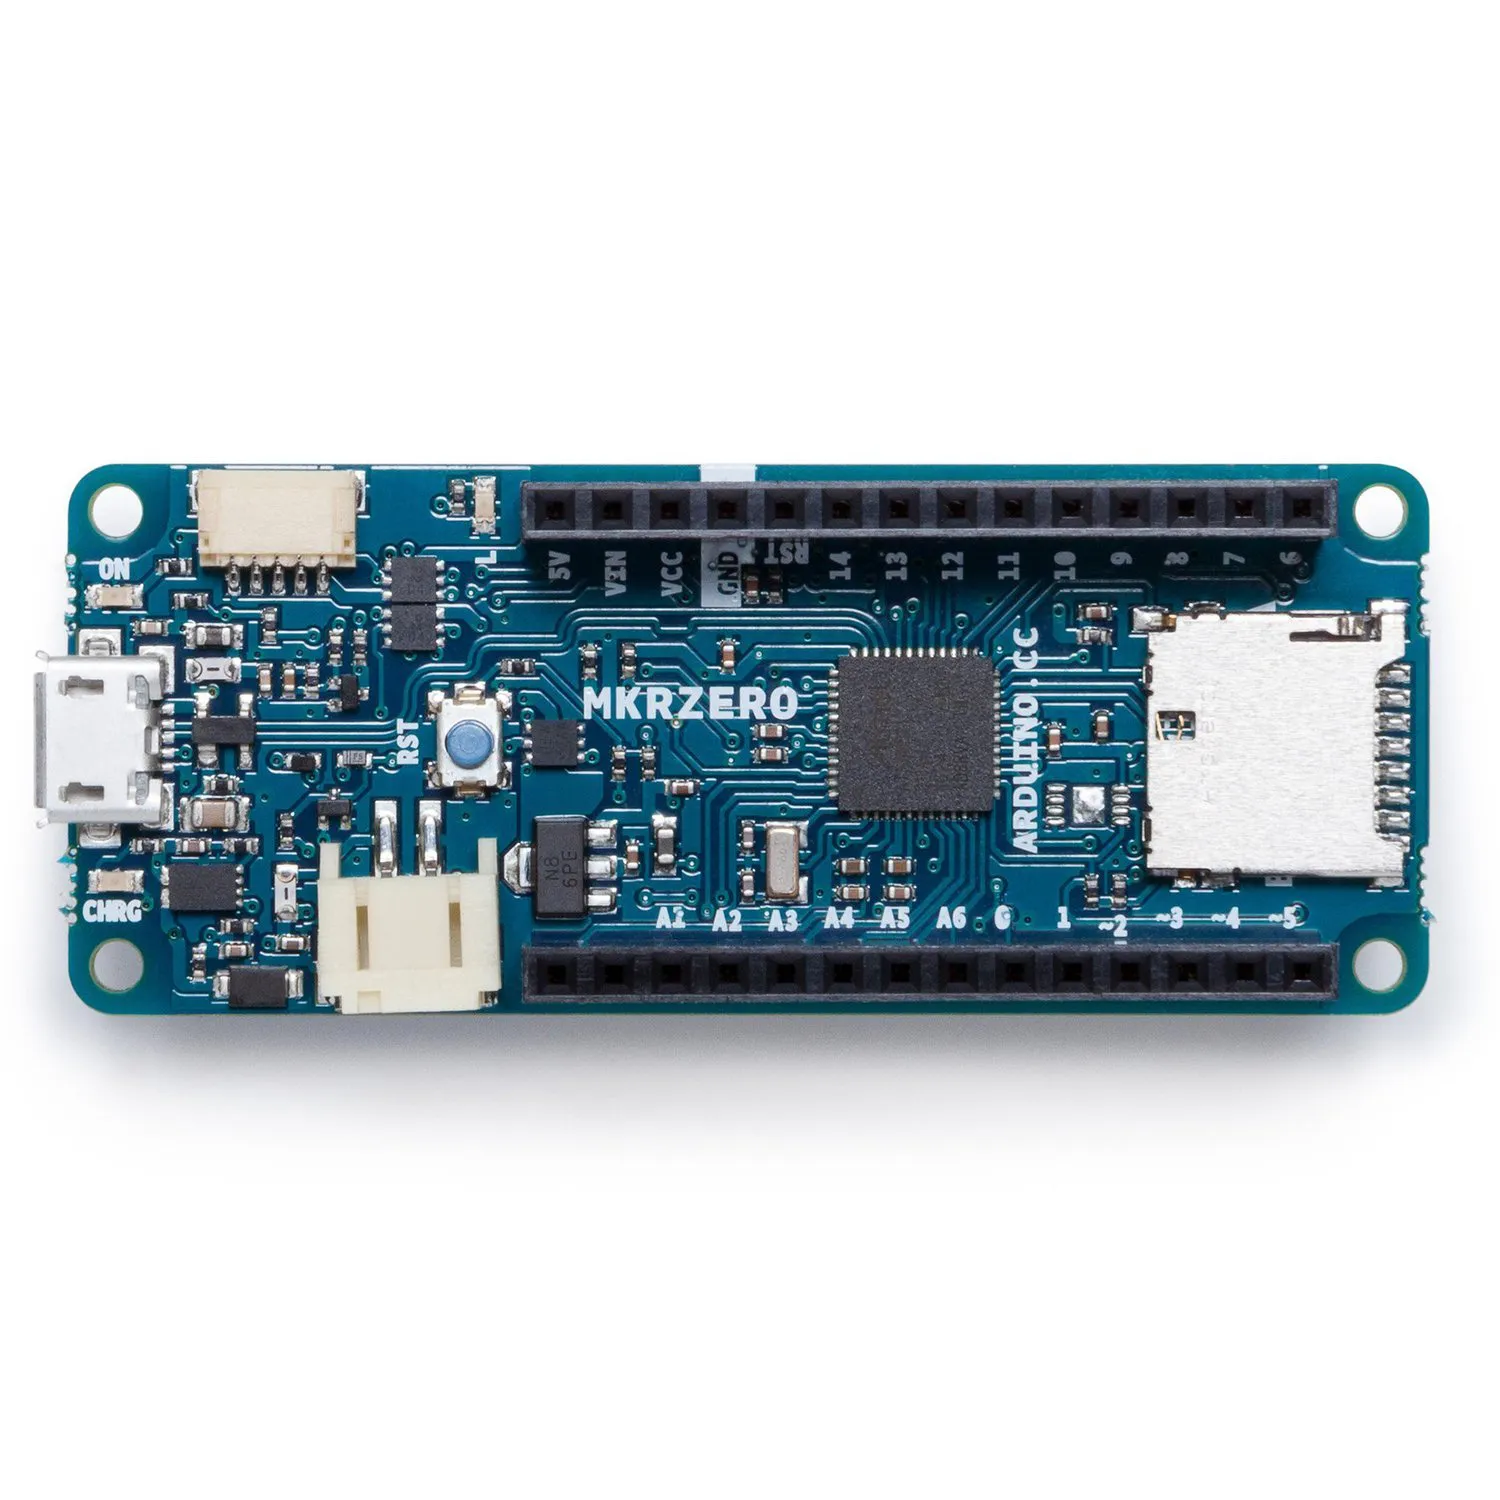 Photo of Arduino MKR ZERO (I2S bus  SD for sound, music  digital audio data)